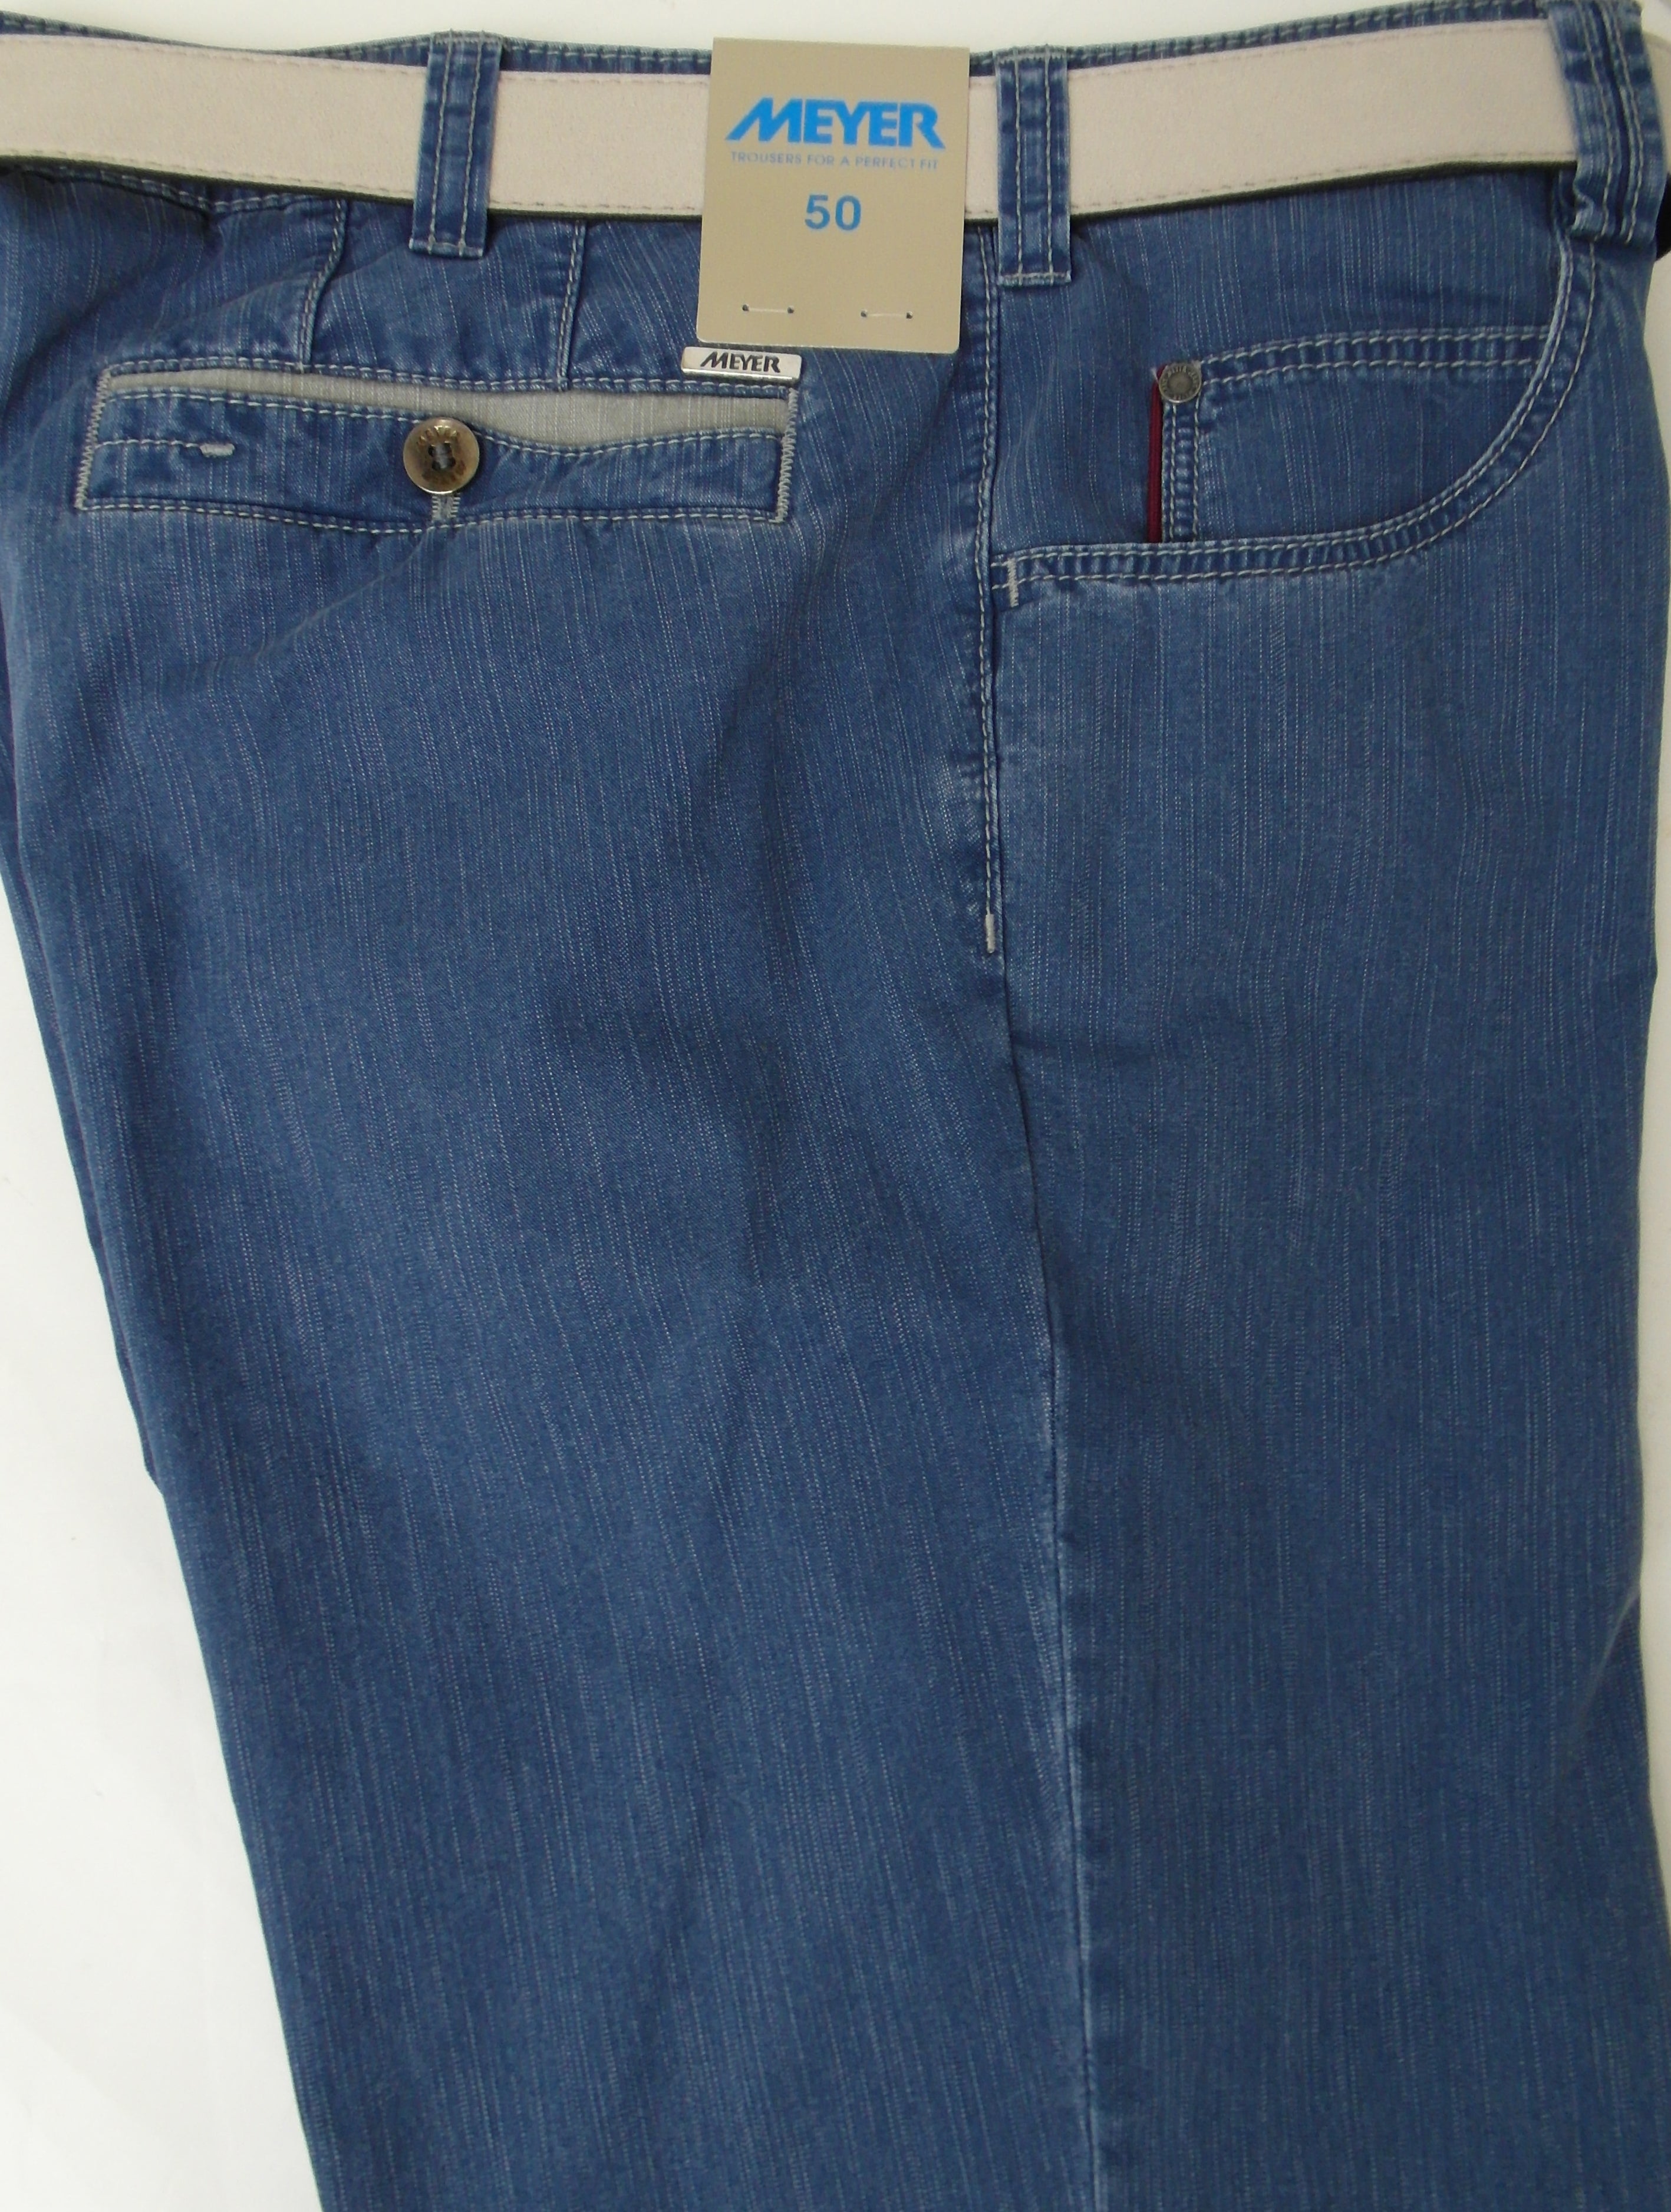 Meyer - Diego - Casual Pant Weight 5002-3 - BrownsMenswear.com